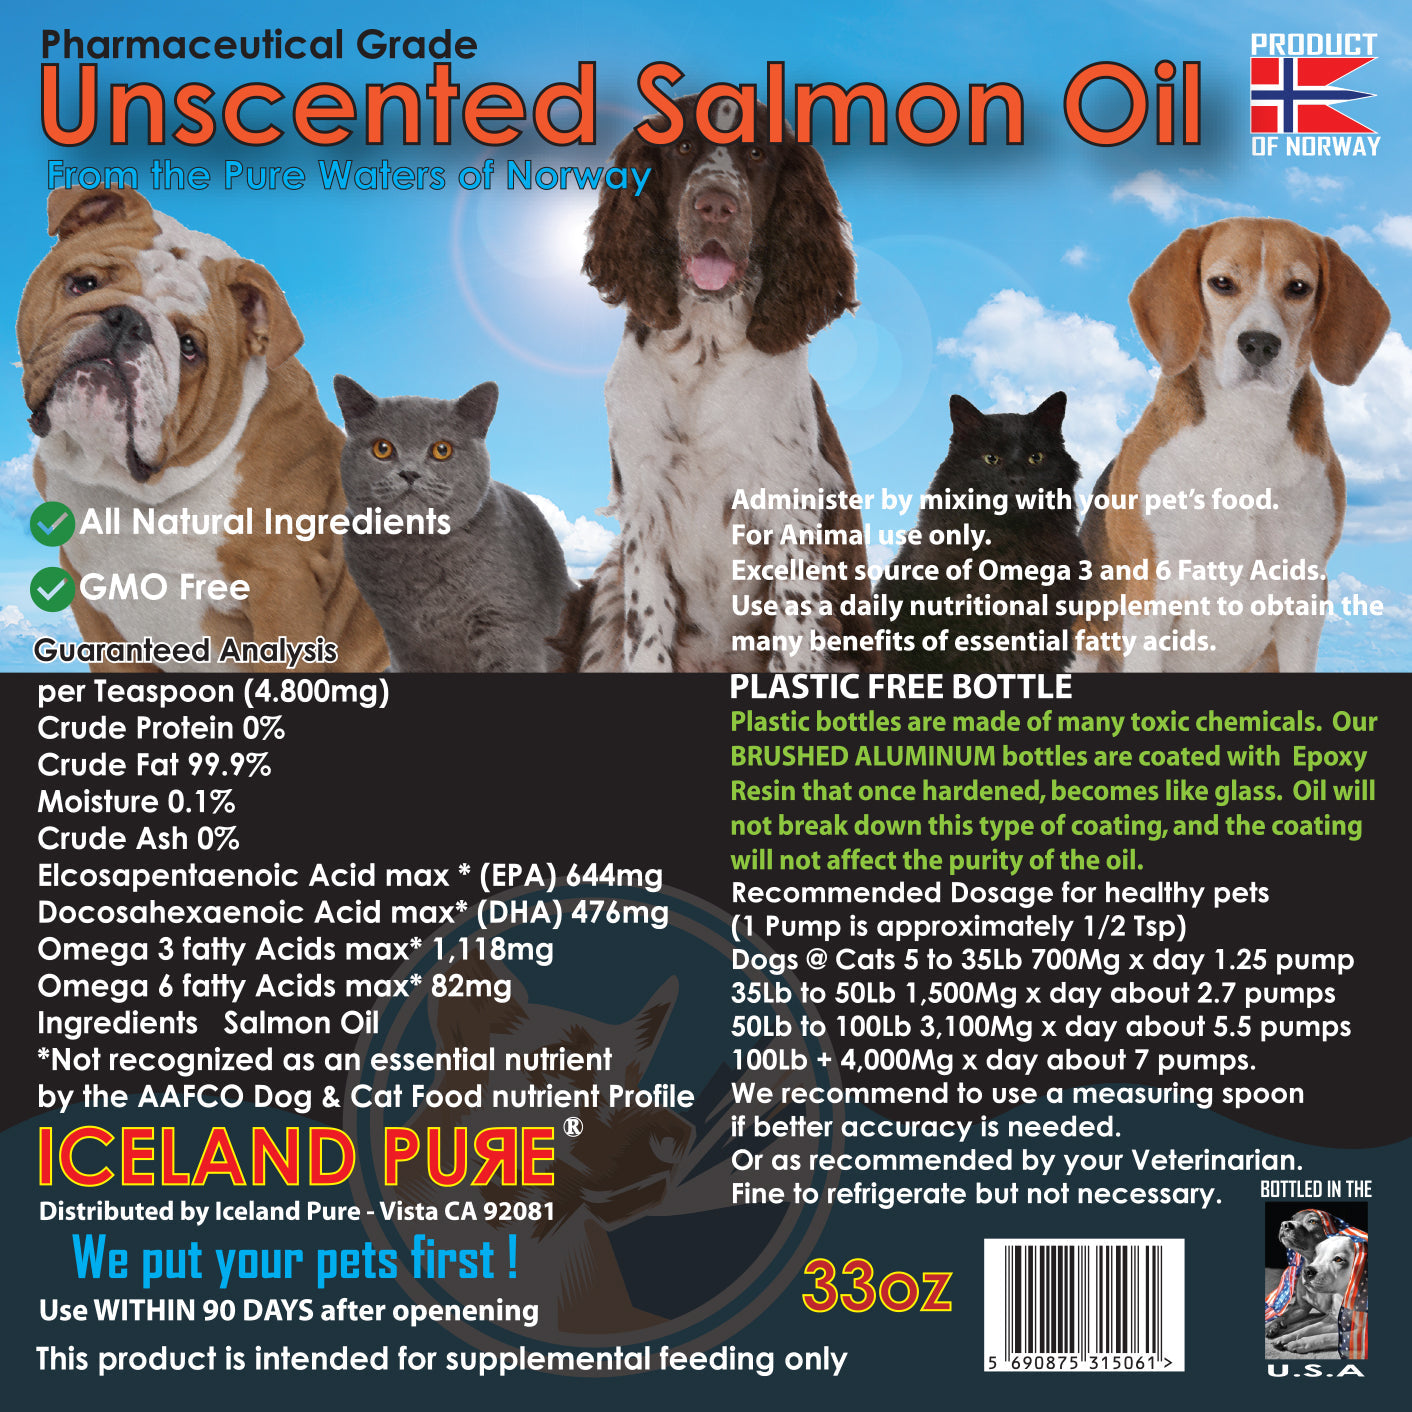 Salmon Oil (Pharmaceutical Grade & Unscented) - 33oz